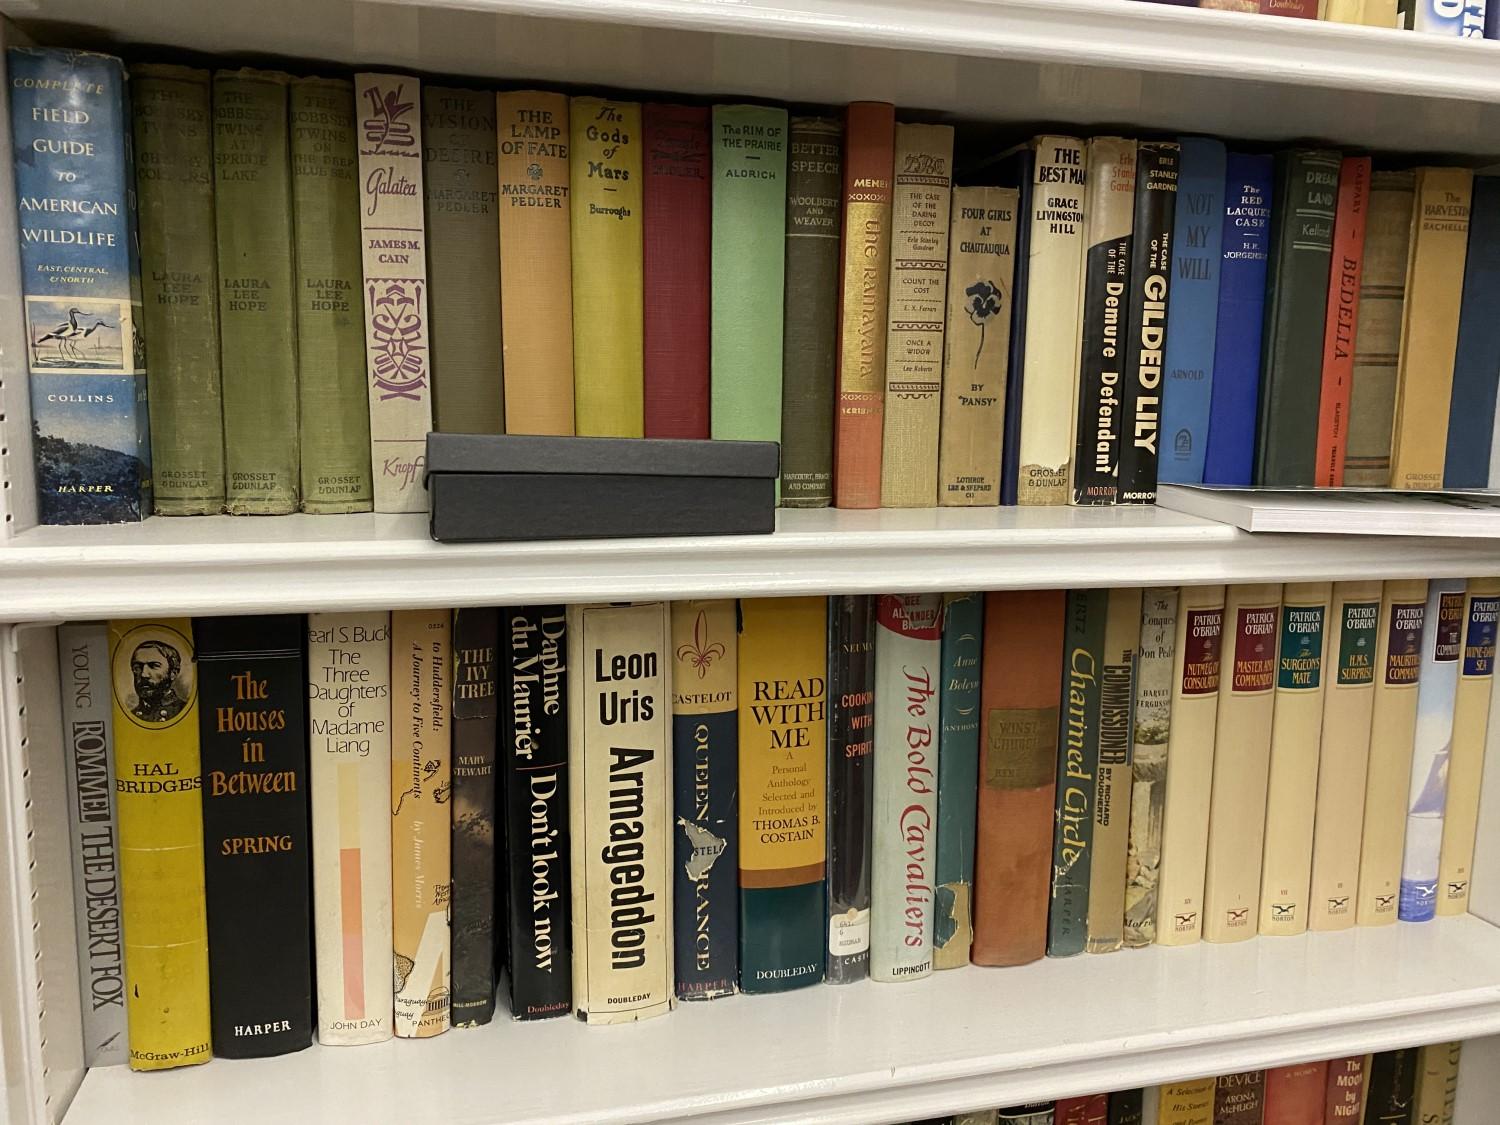 Contents of bookshelf lot - vintage books